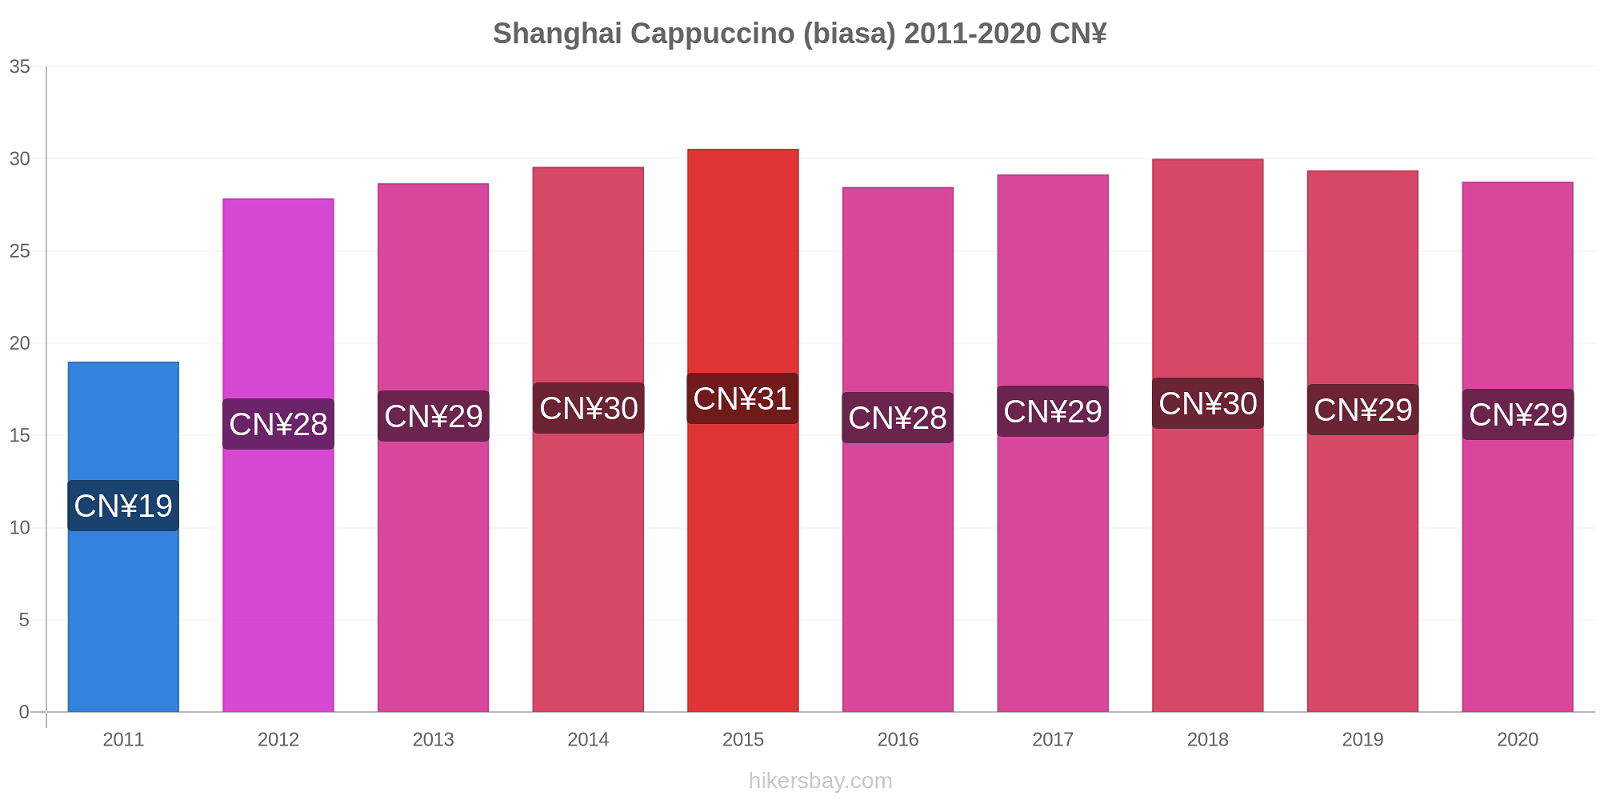 Shanghai perubahan harga Cappuccino (biasa) hikersbay.com